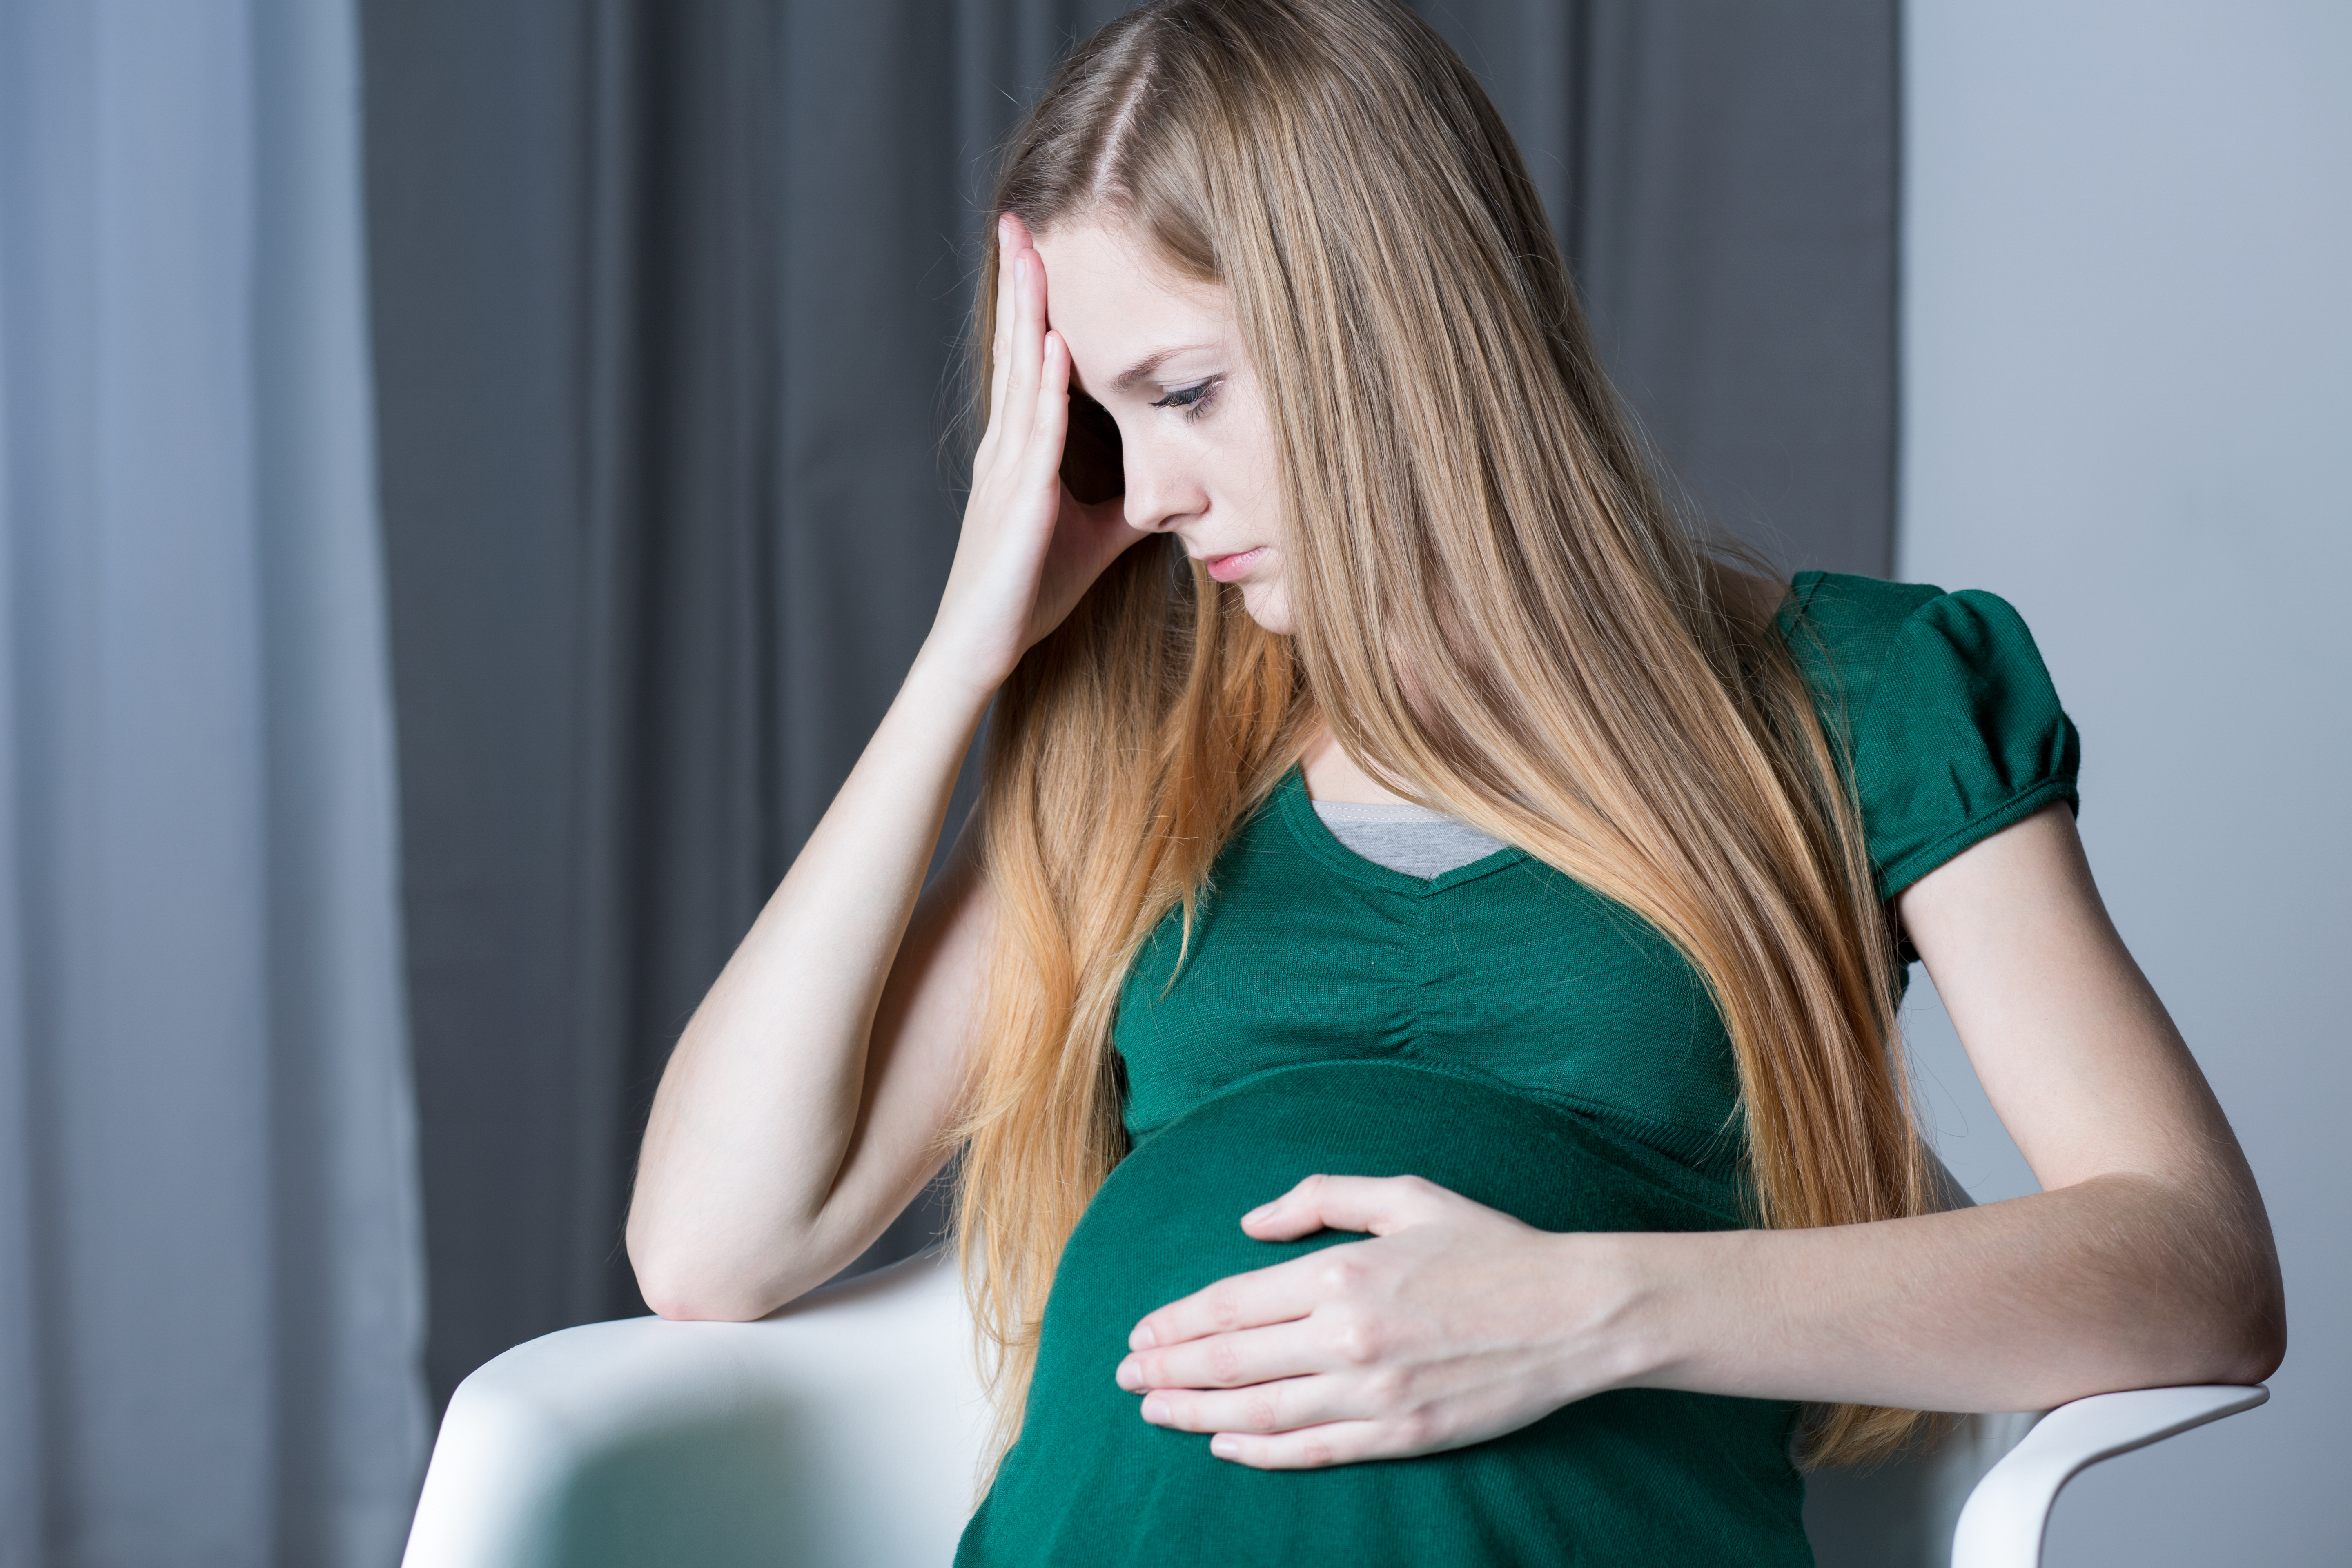 A pregnant woman | Source: Shutterstock